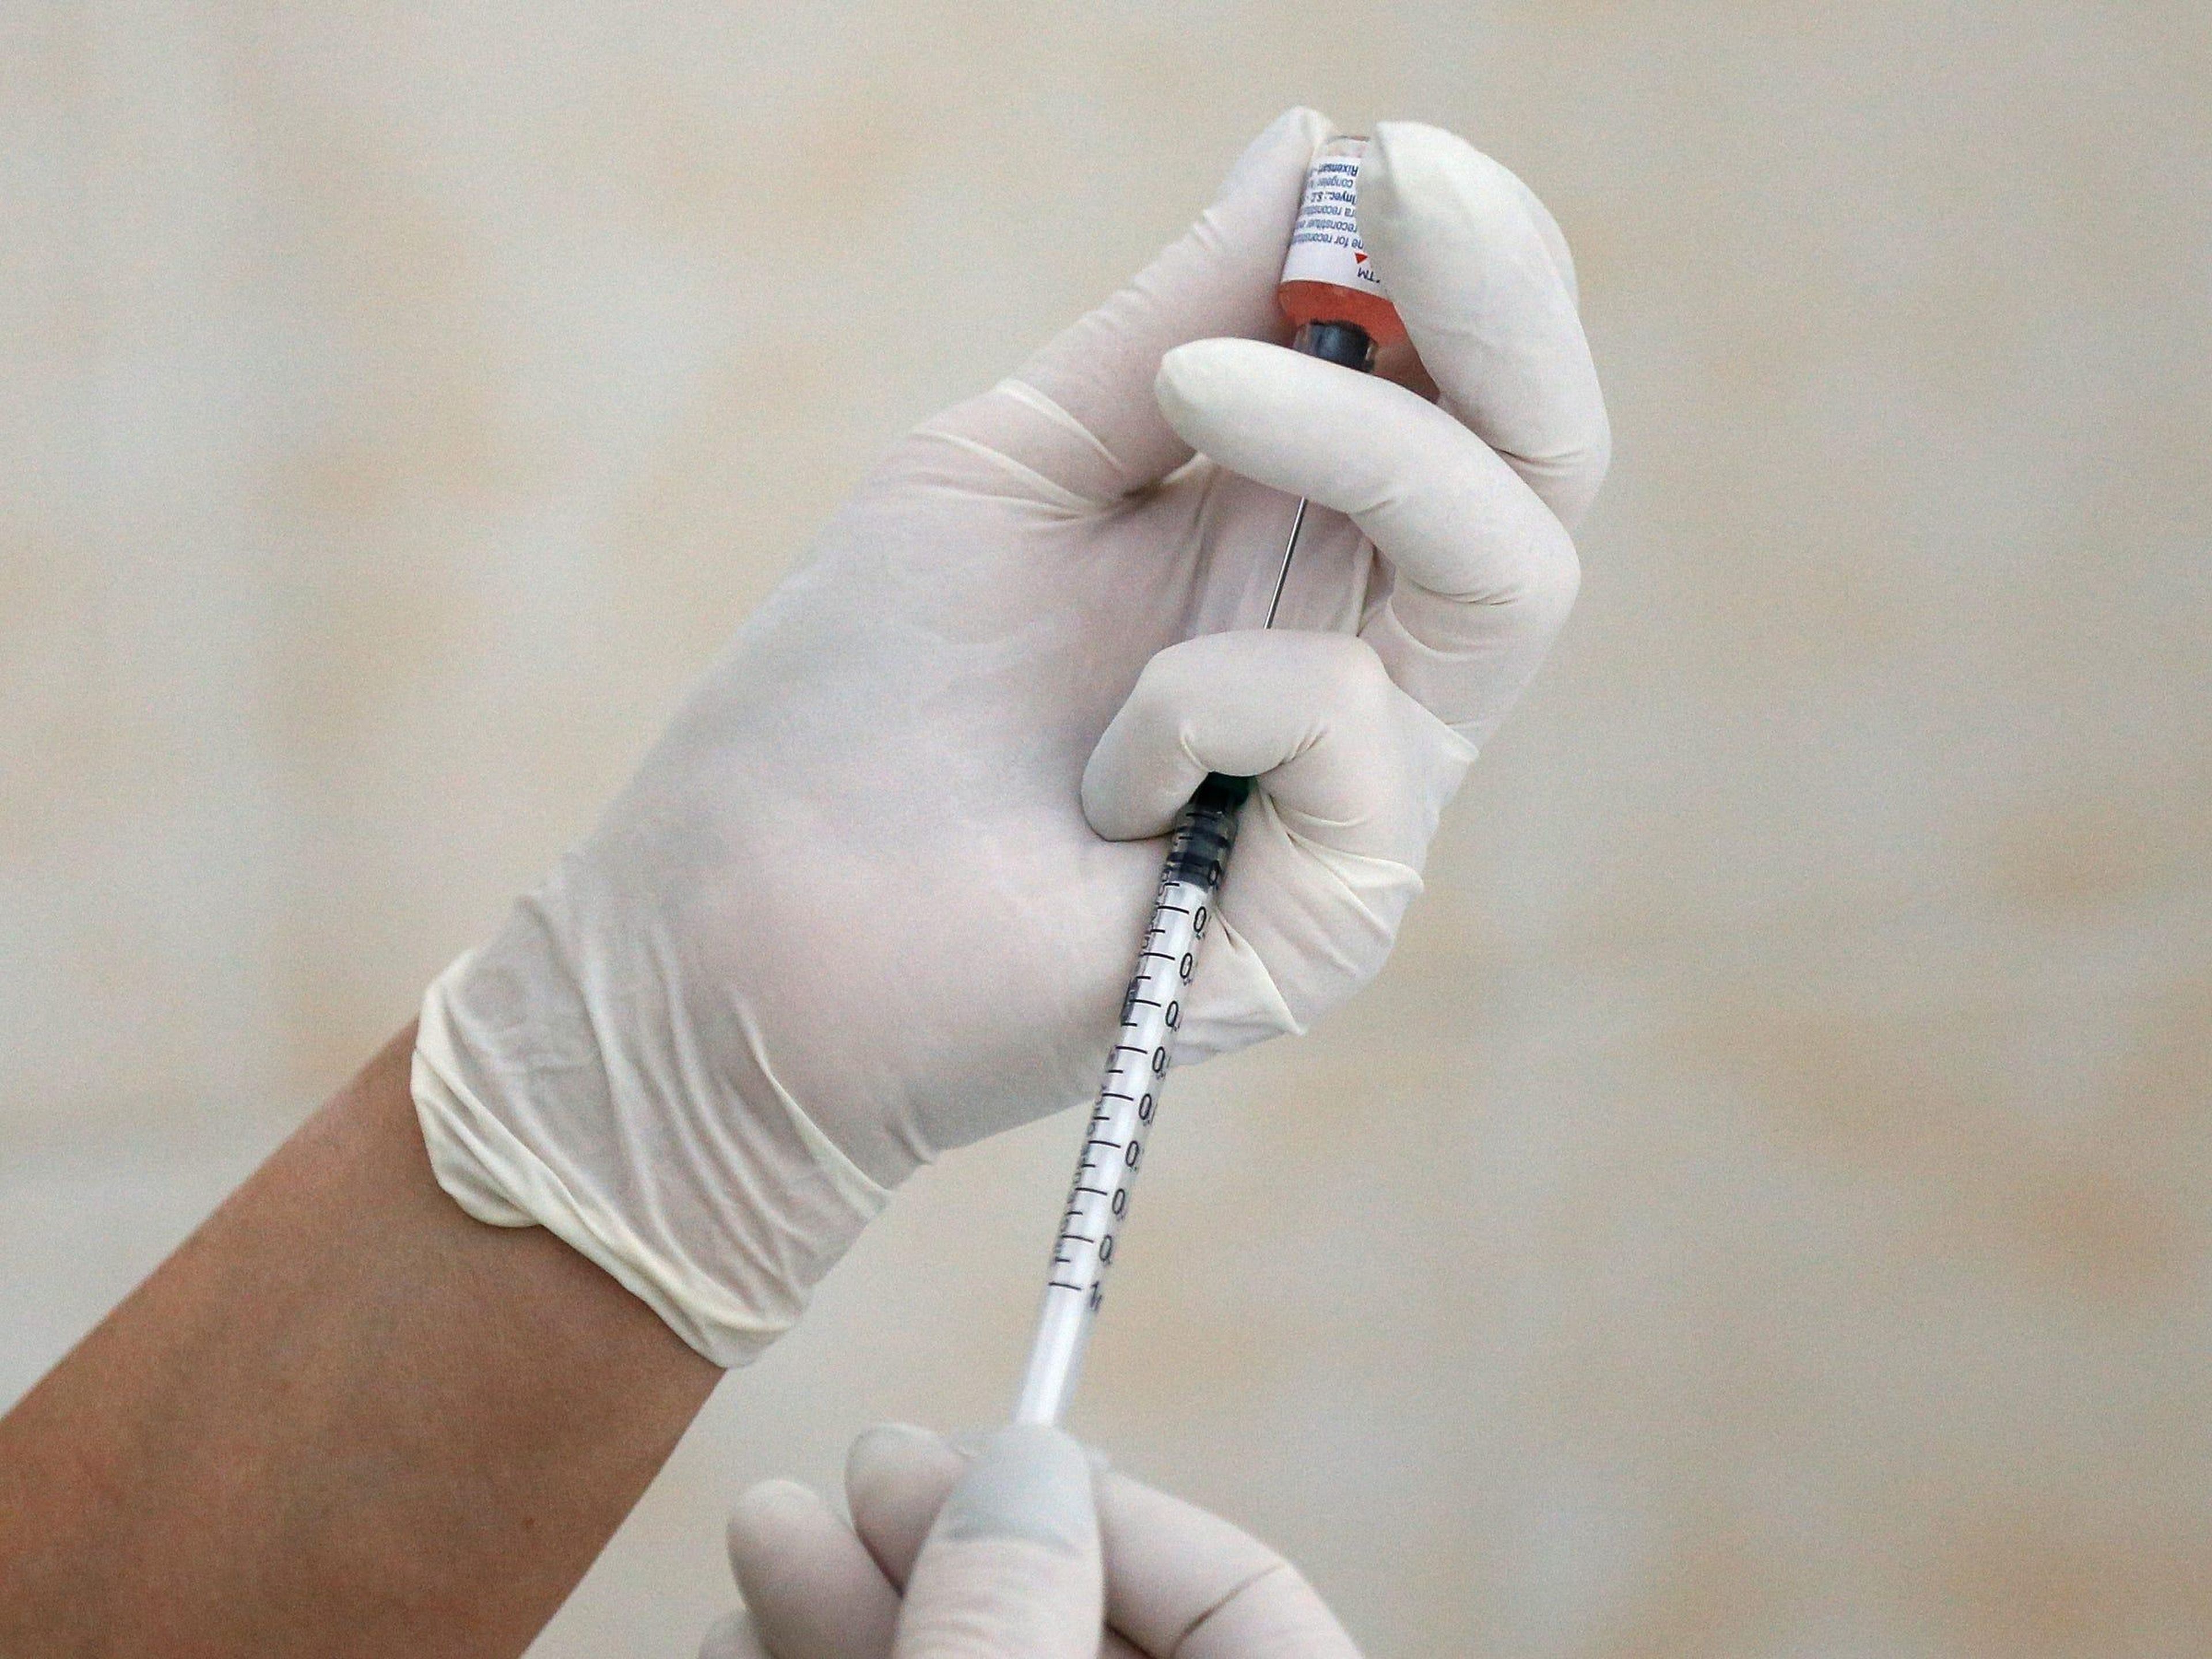 A nurse fills a syringe with a vaccine.